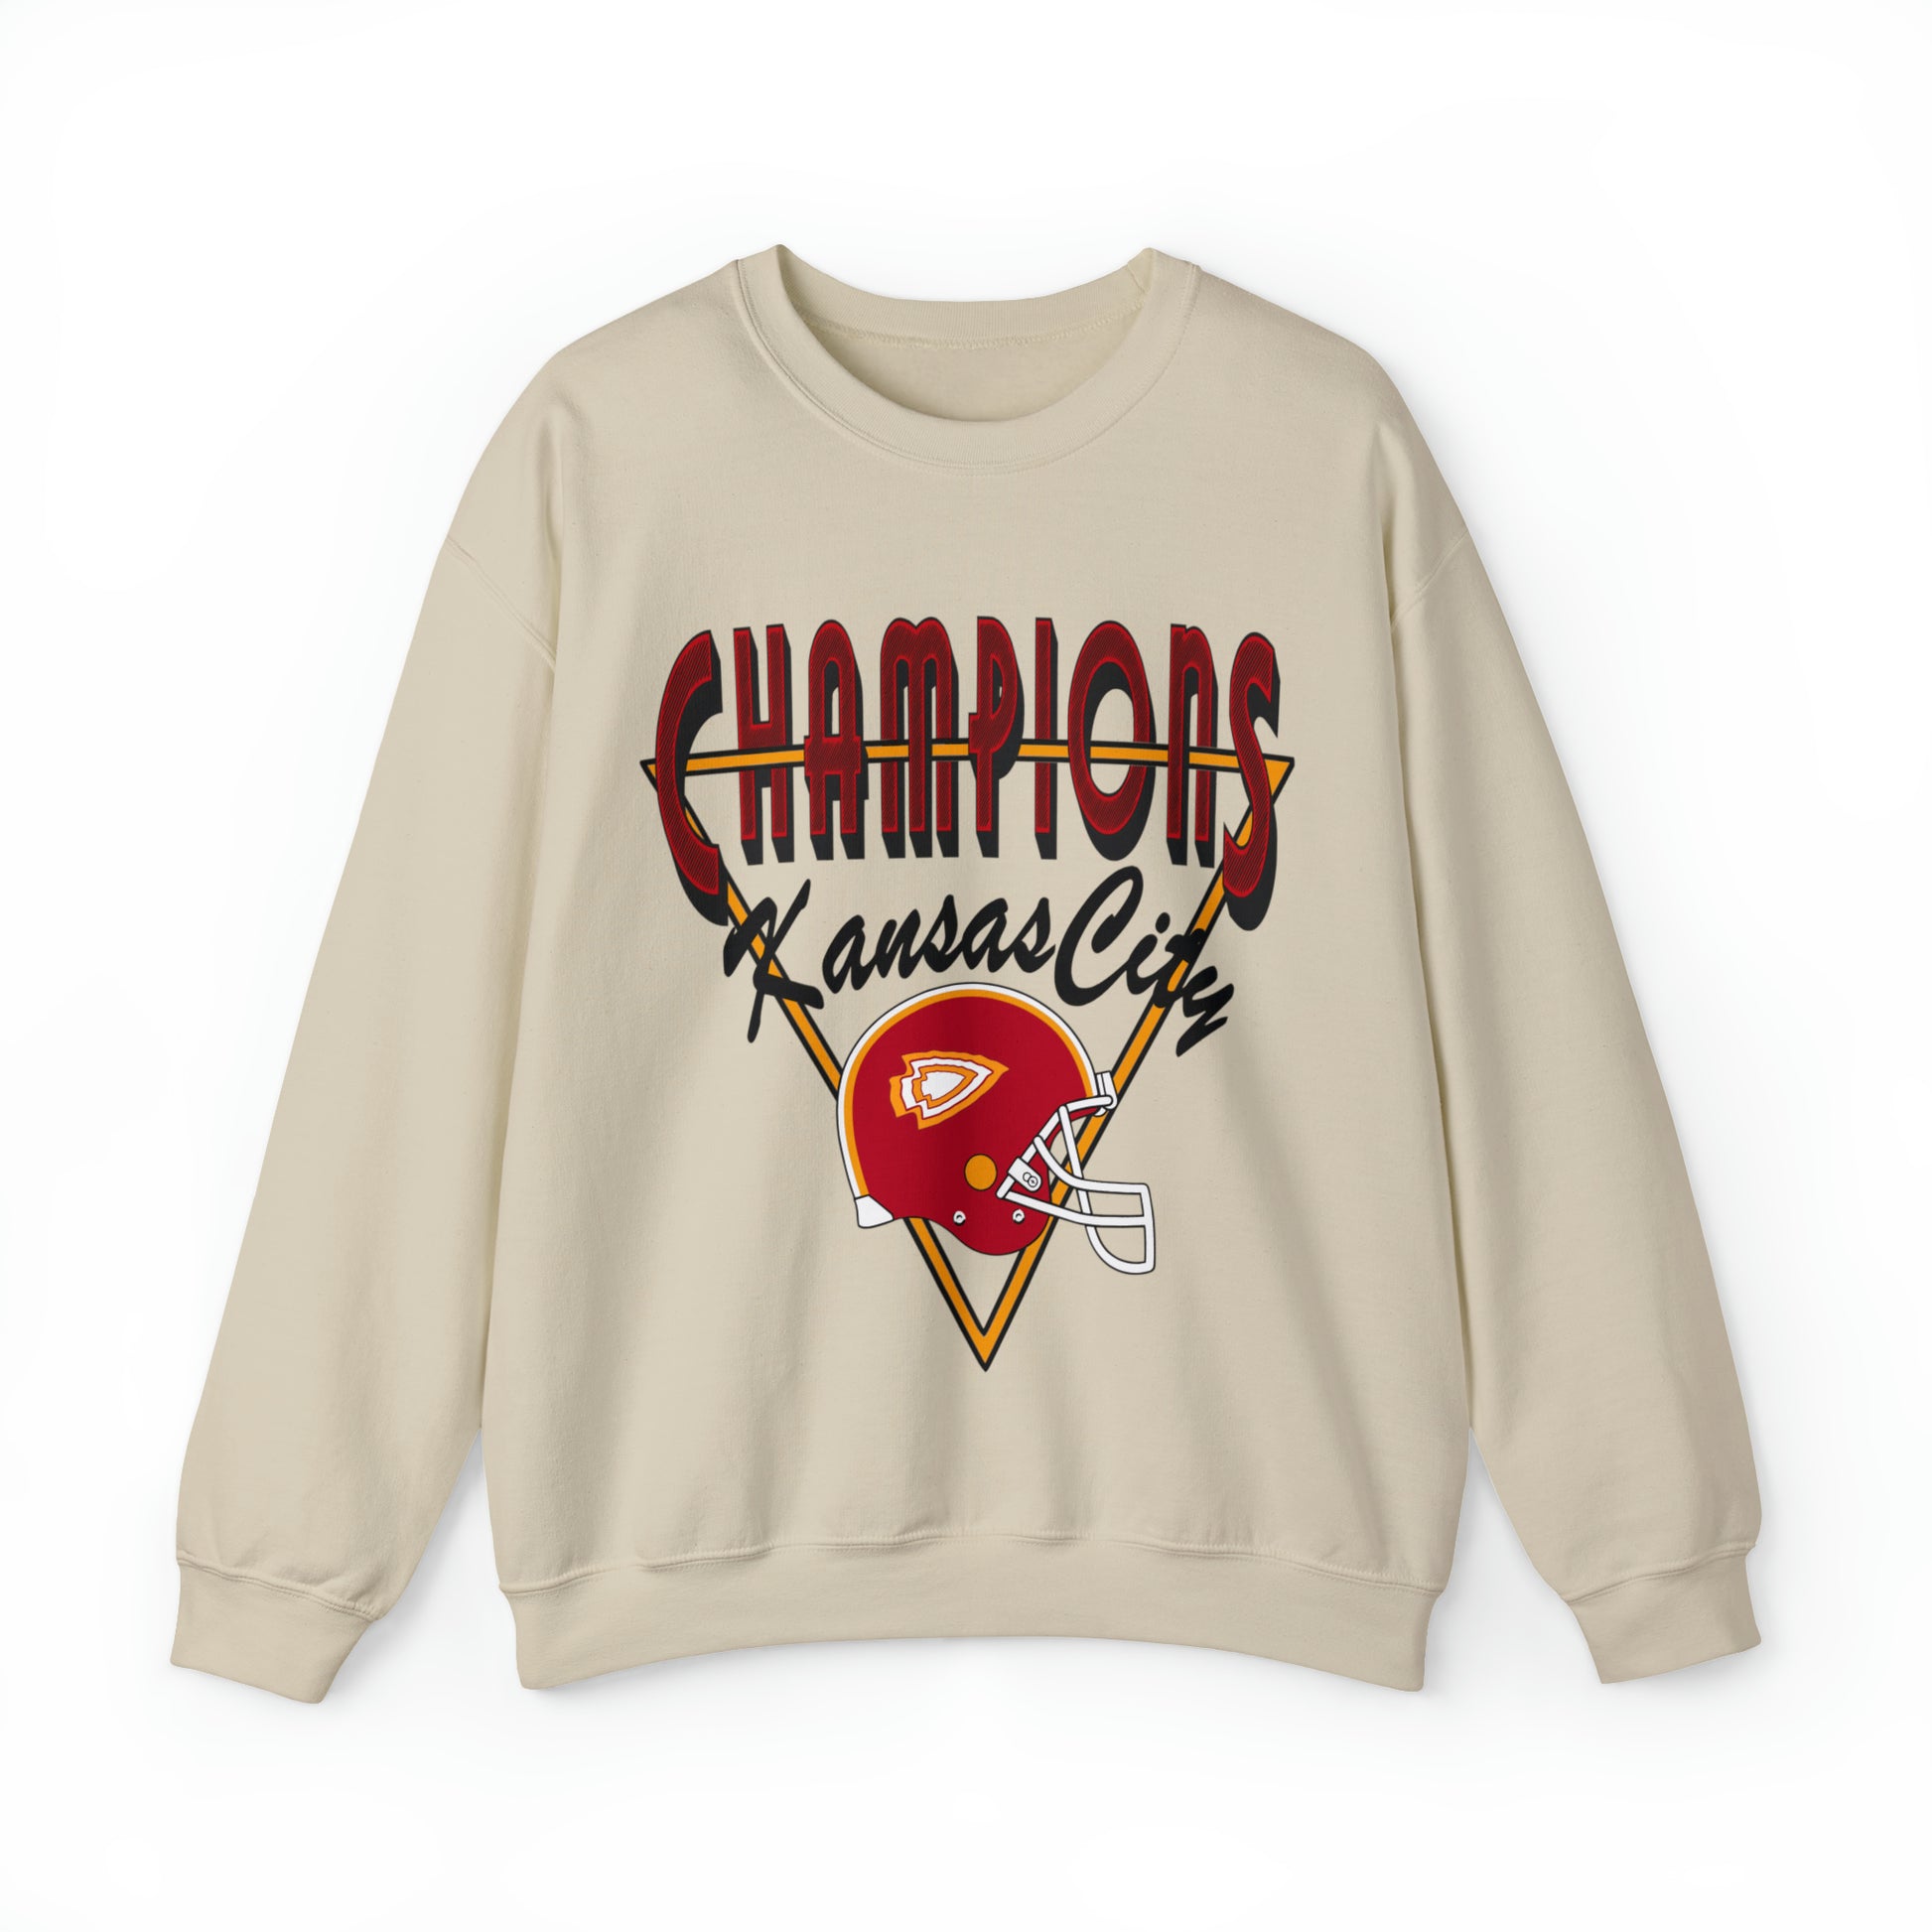 Vintage Kansas City Chiefs Champion Crewneck - Retro NFL Football Unisex Sweatshirt - Men's & Women's Oversized Apparel - Design 4